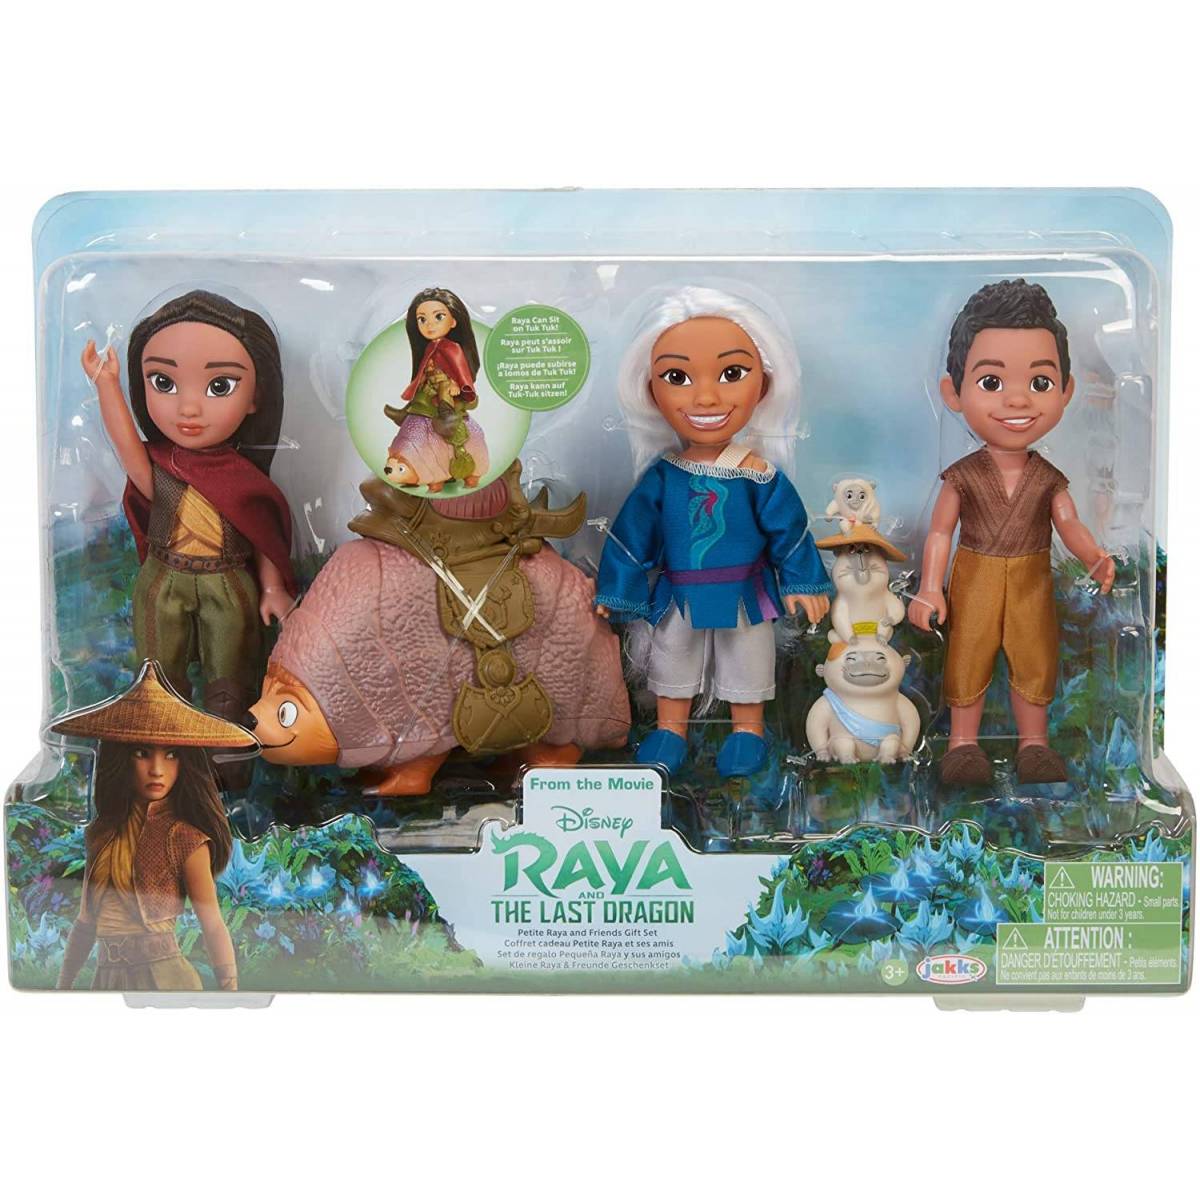 Disney Store Raya Small Soft Toy Doll, Raya and the Last Dragon